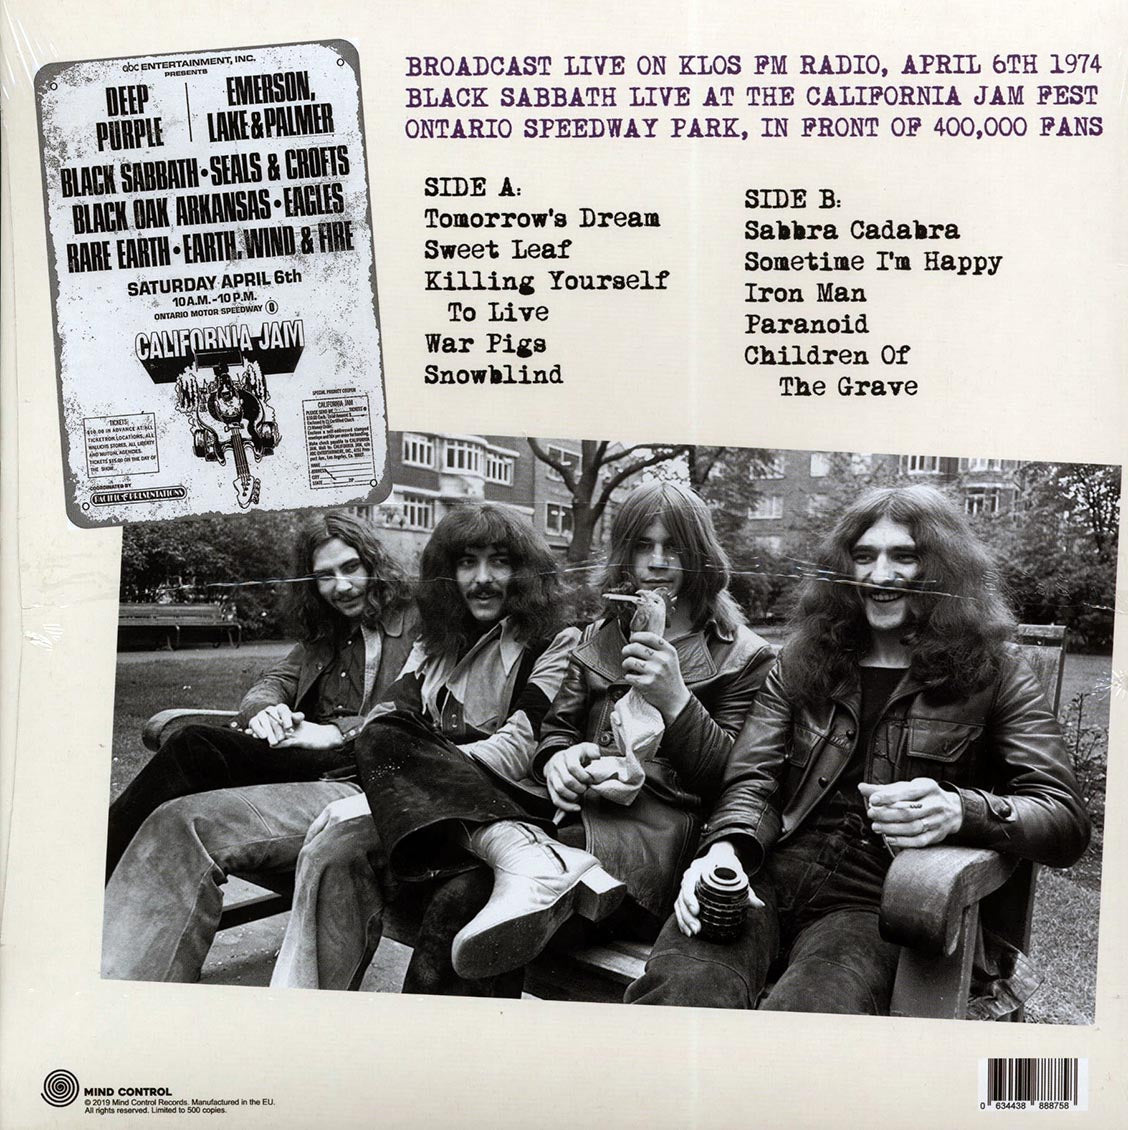 Black Sabbath – Live From The Ontario Speedway Park (purple vinyl)